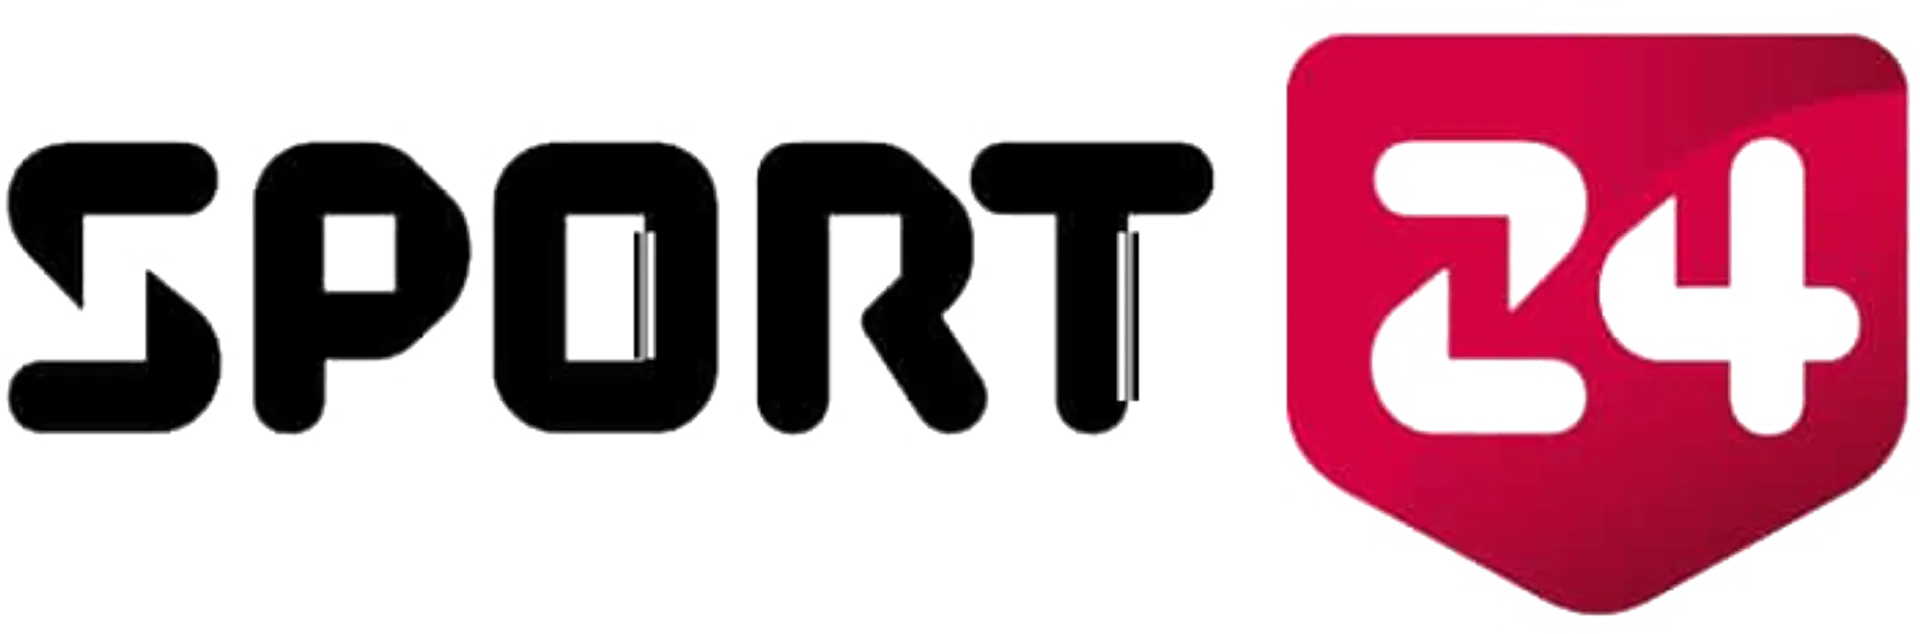 SPORT24 logo